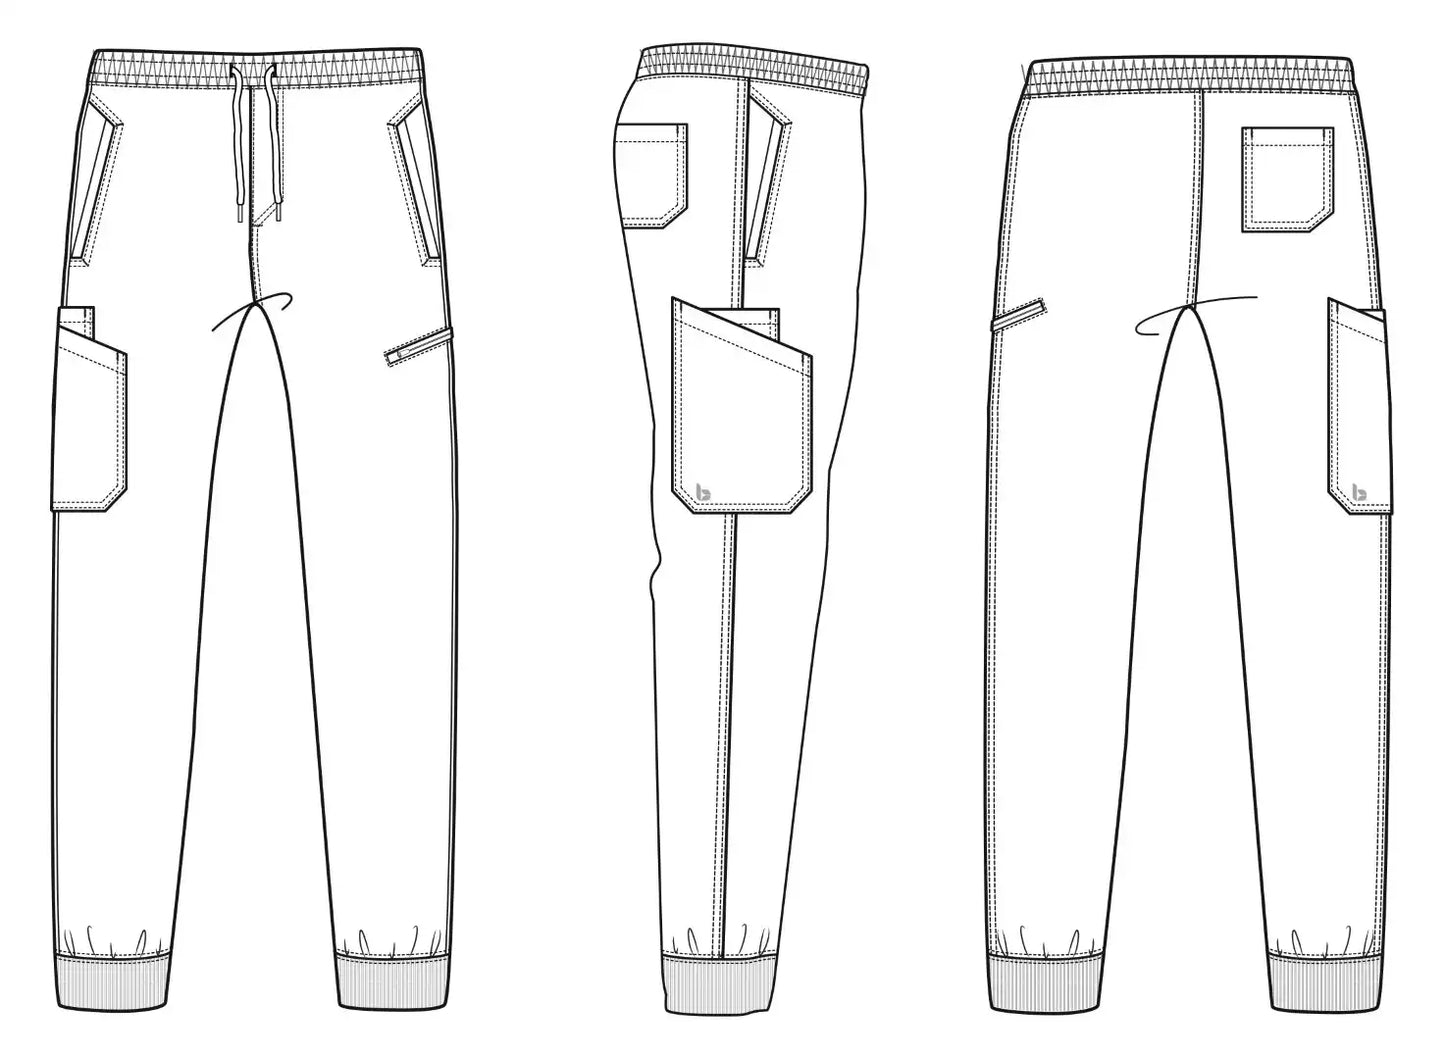 Barco Unify Men's 6 Pocket Jogger - New Royal - The Uniform Store